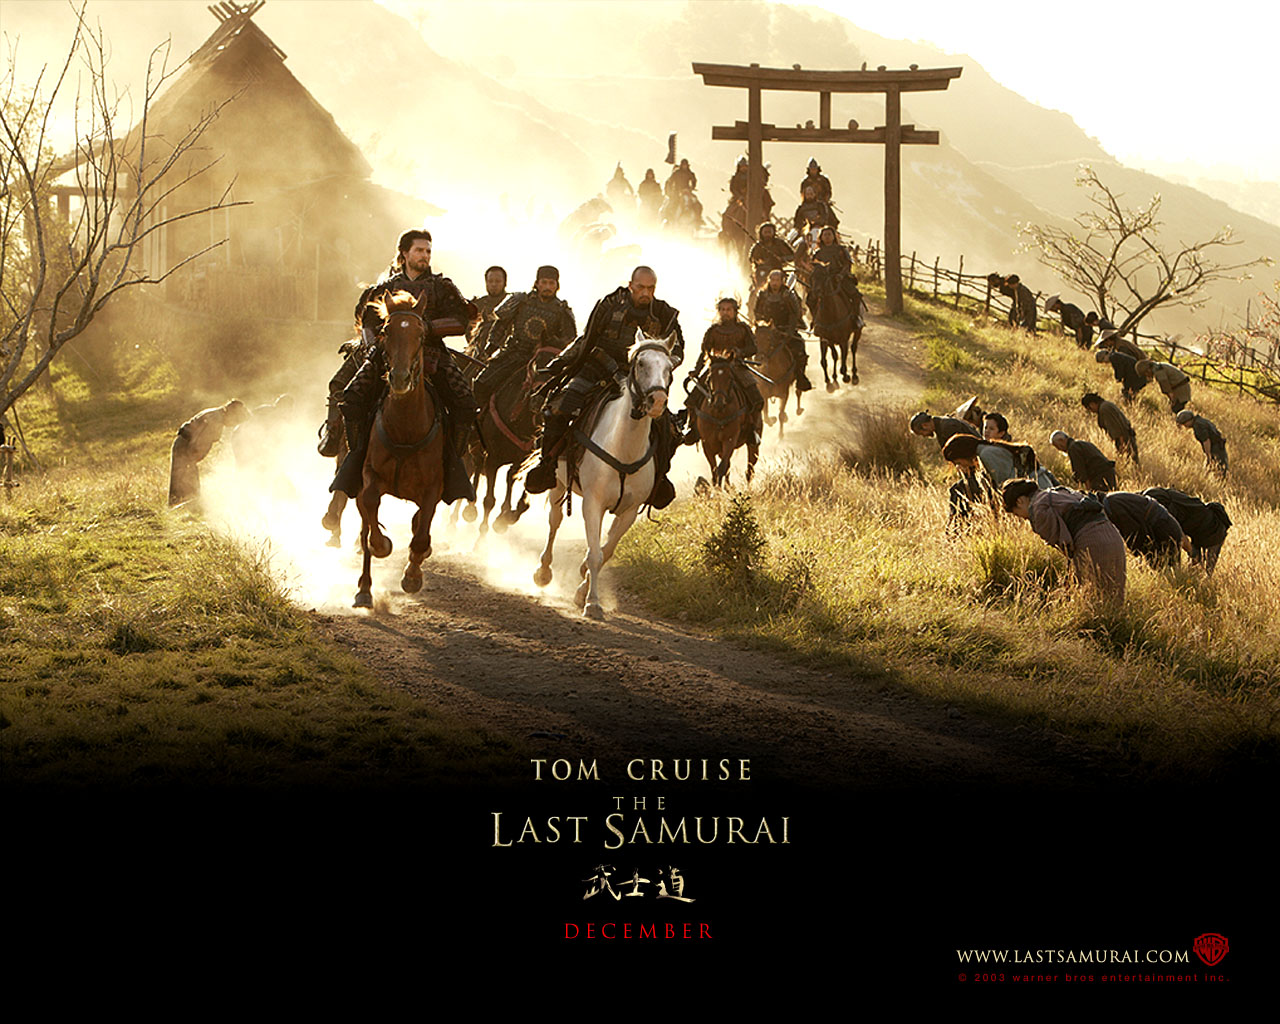 Download full size The Last Samurai wallpaper / Movies / 1280x1024